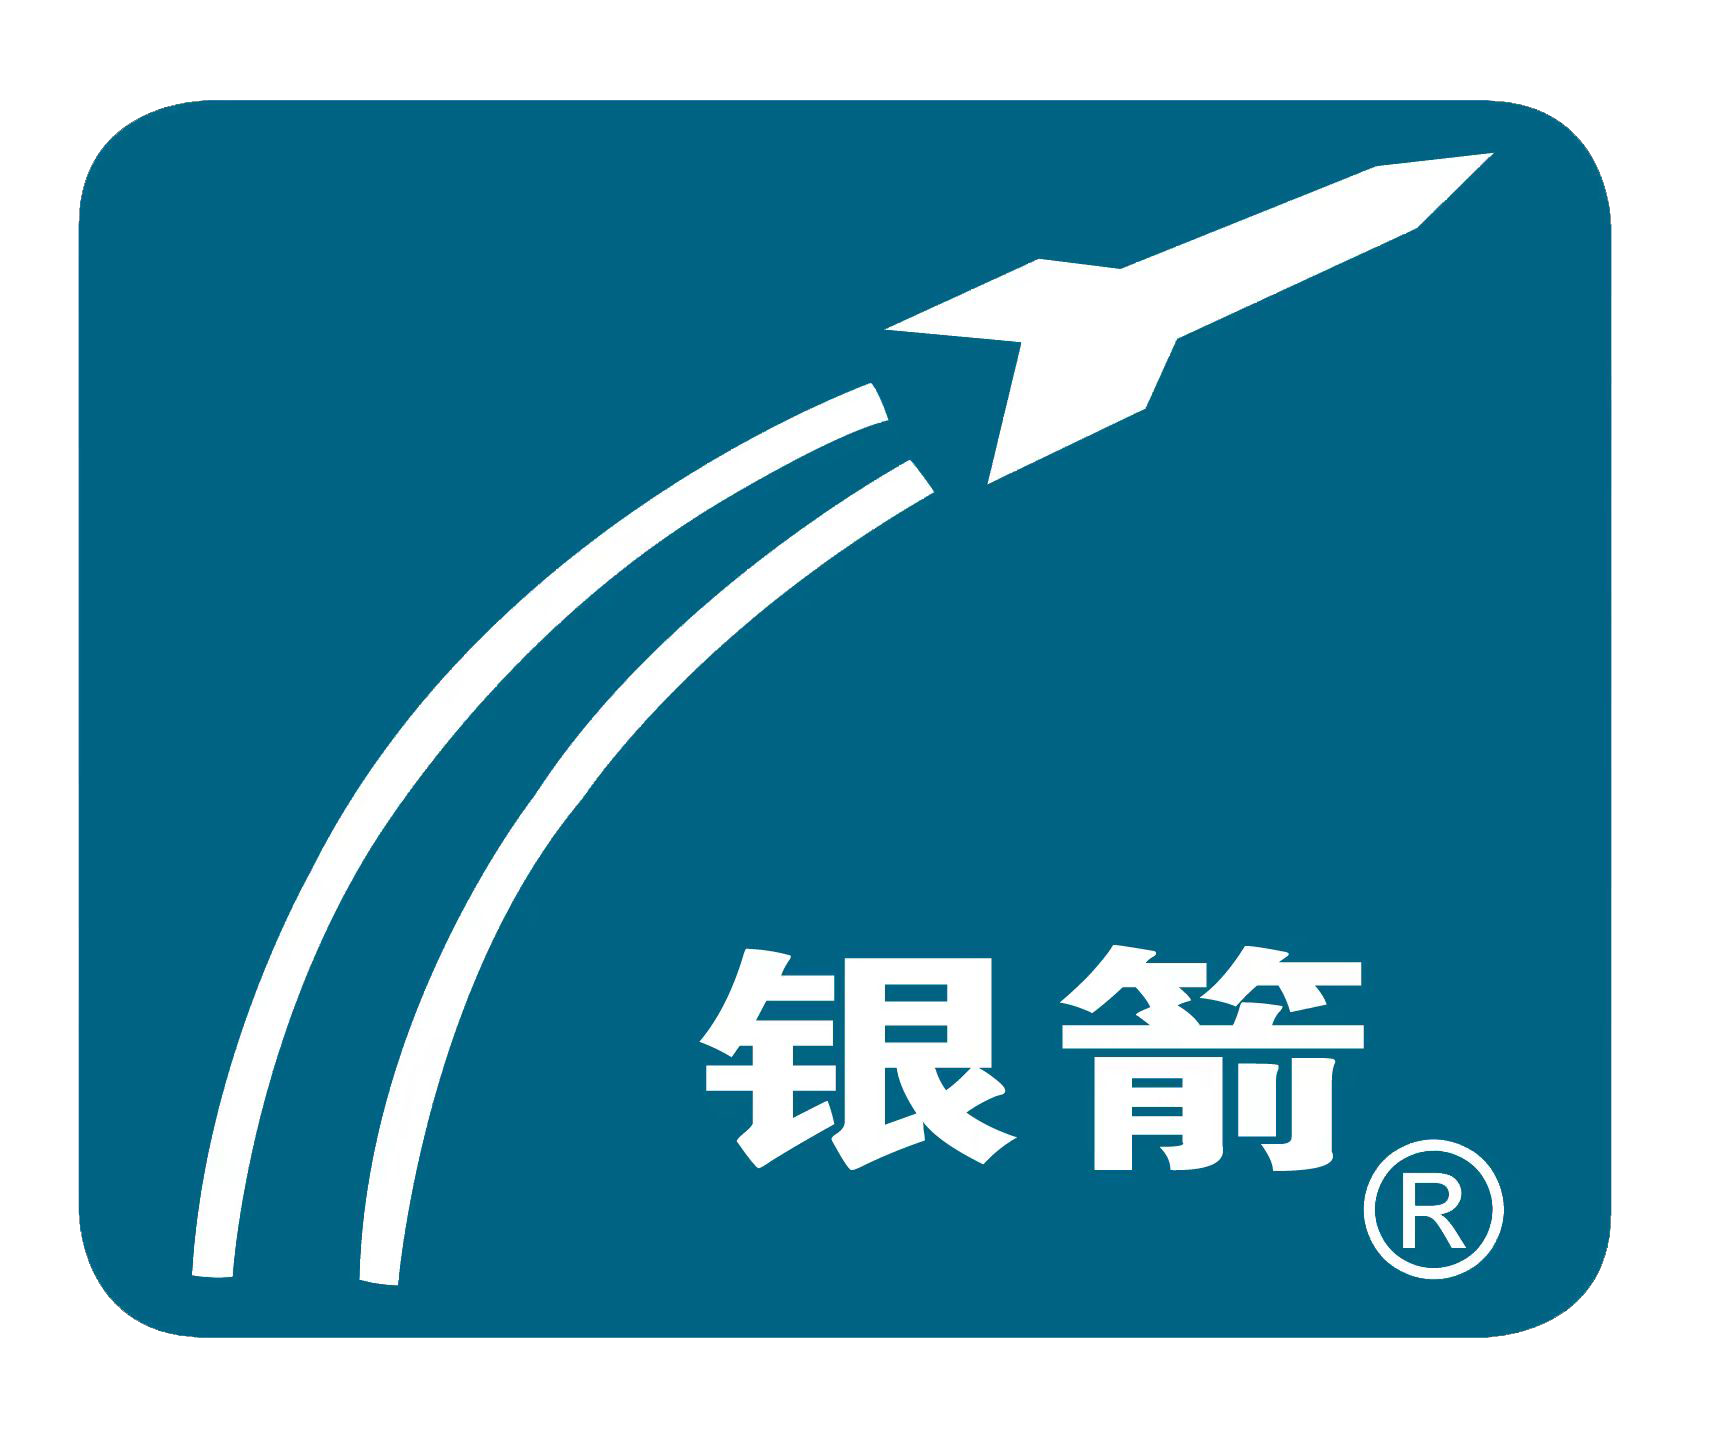 Silver Rocket Metallic Pigment Co.,Ltd.